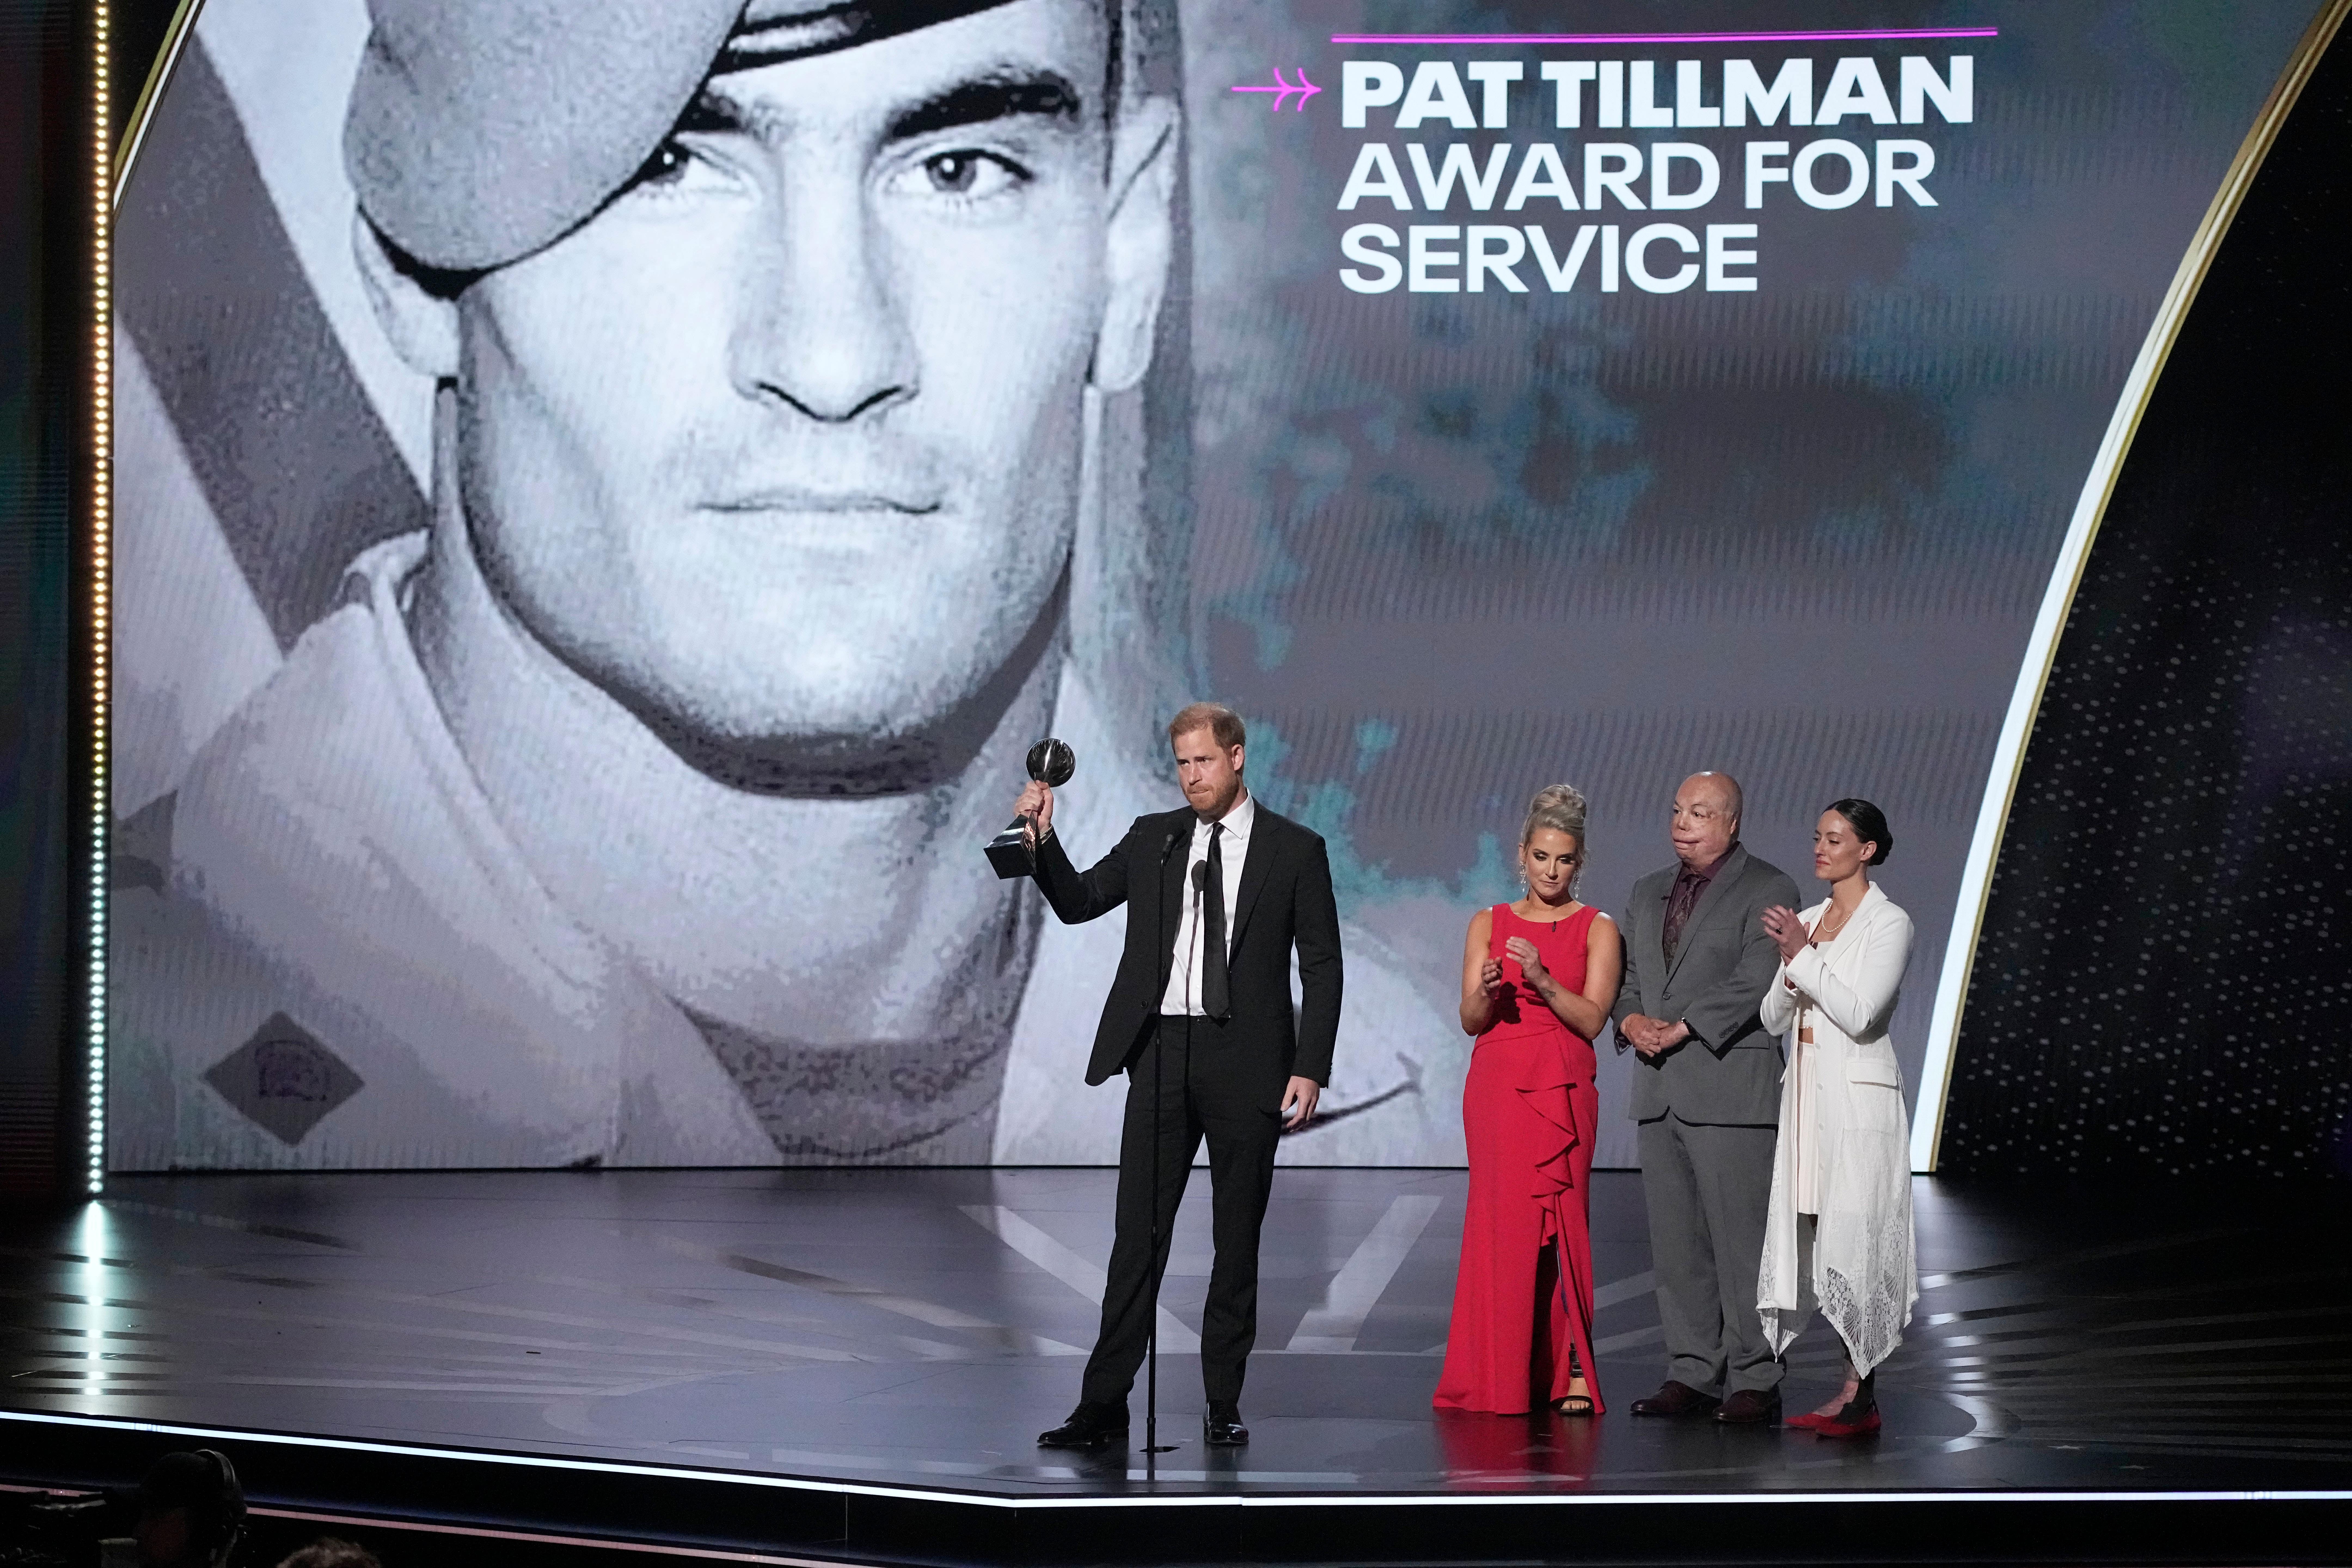 Prince Harry receives the Pat Tillman Award For Service at the Espy Awards.